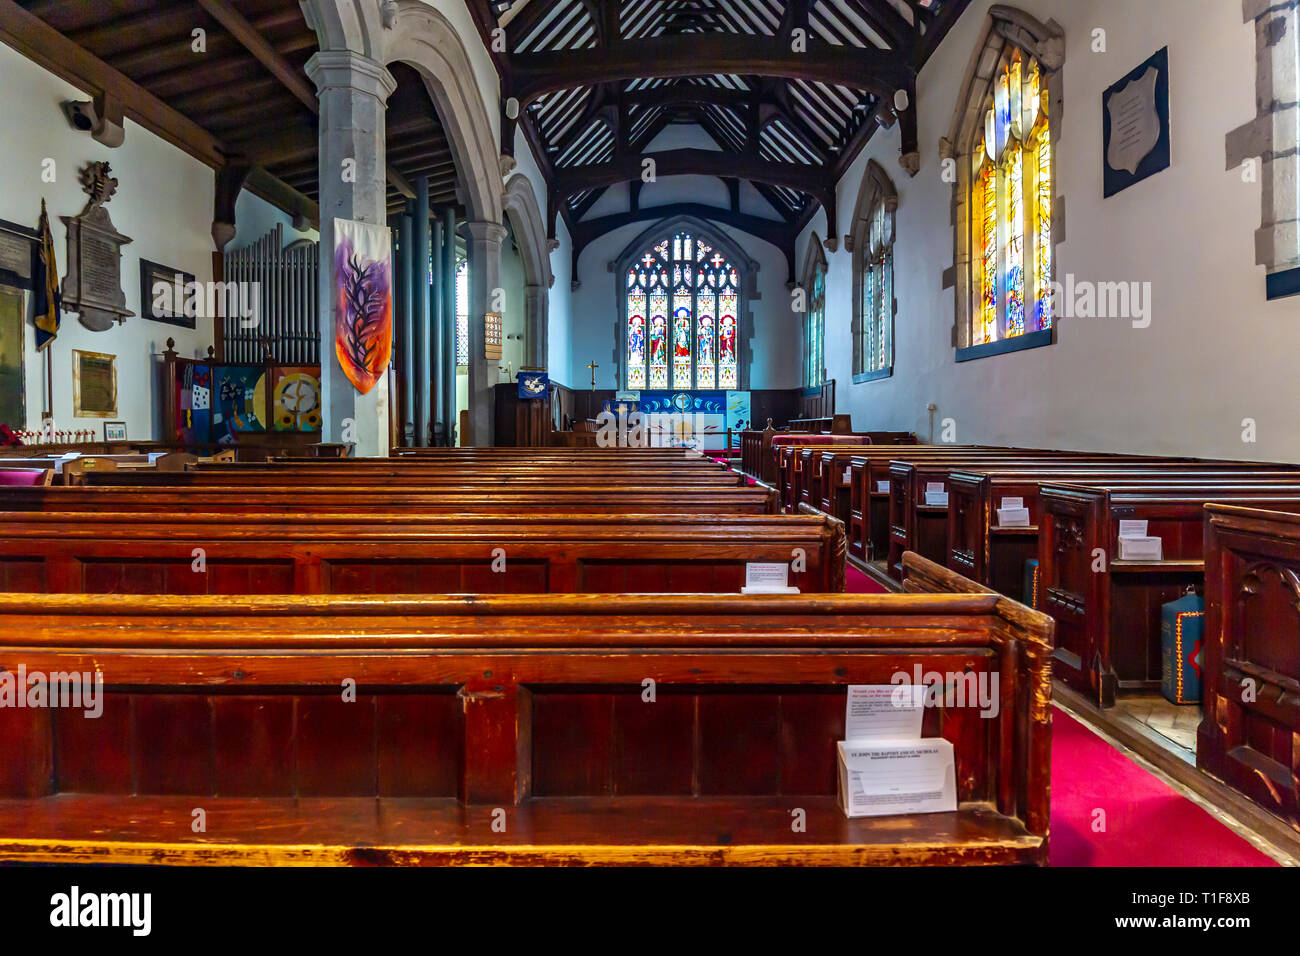 Interior of John the Baptist's Church, Henley in Arden, Warwickshire, uk. Stock Photo